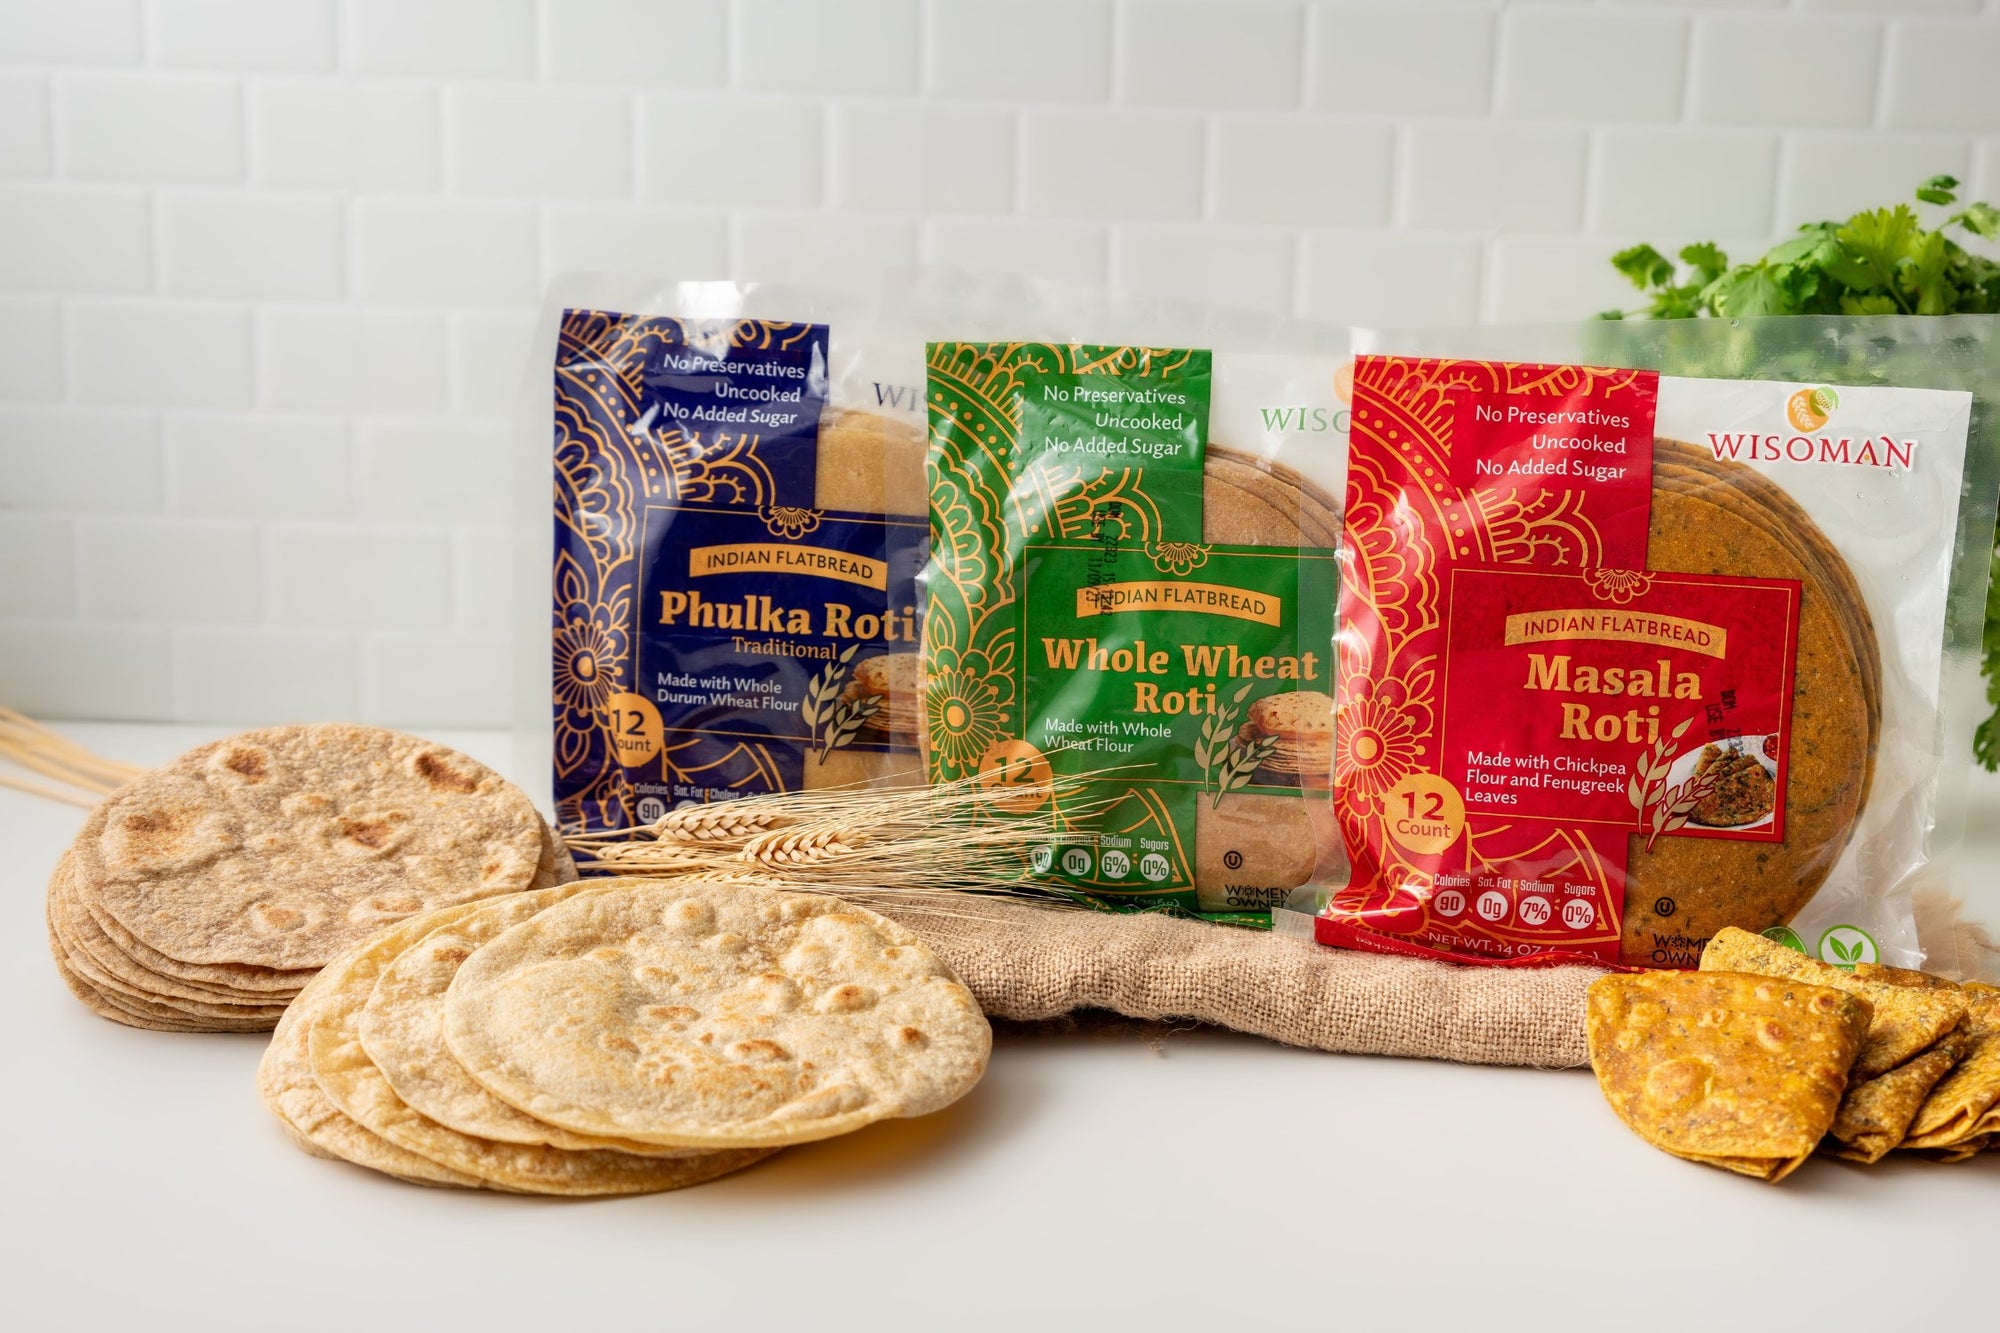 Phulka, Masala and Whole Wheat Vegan Roti